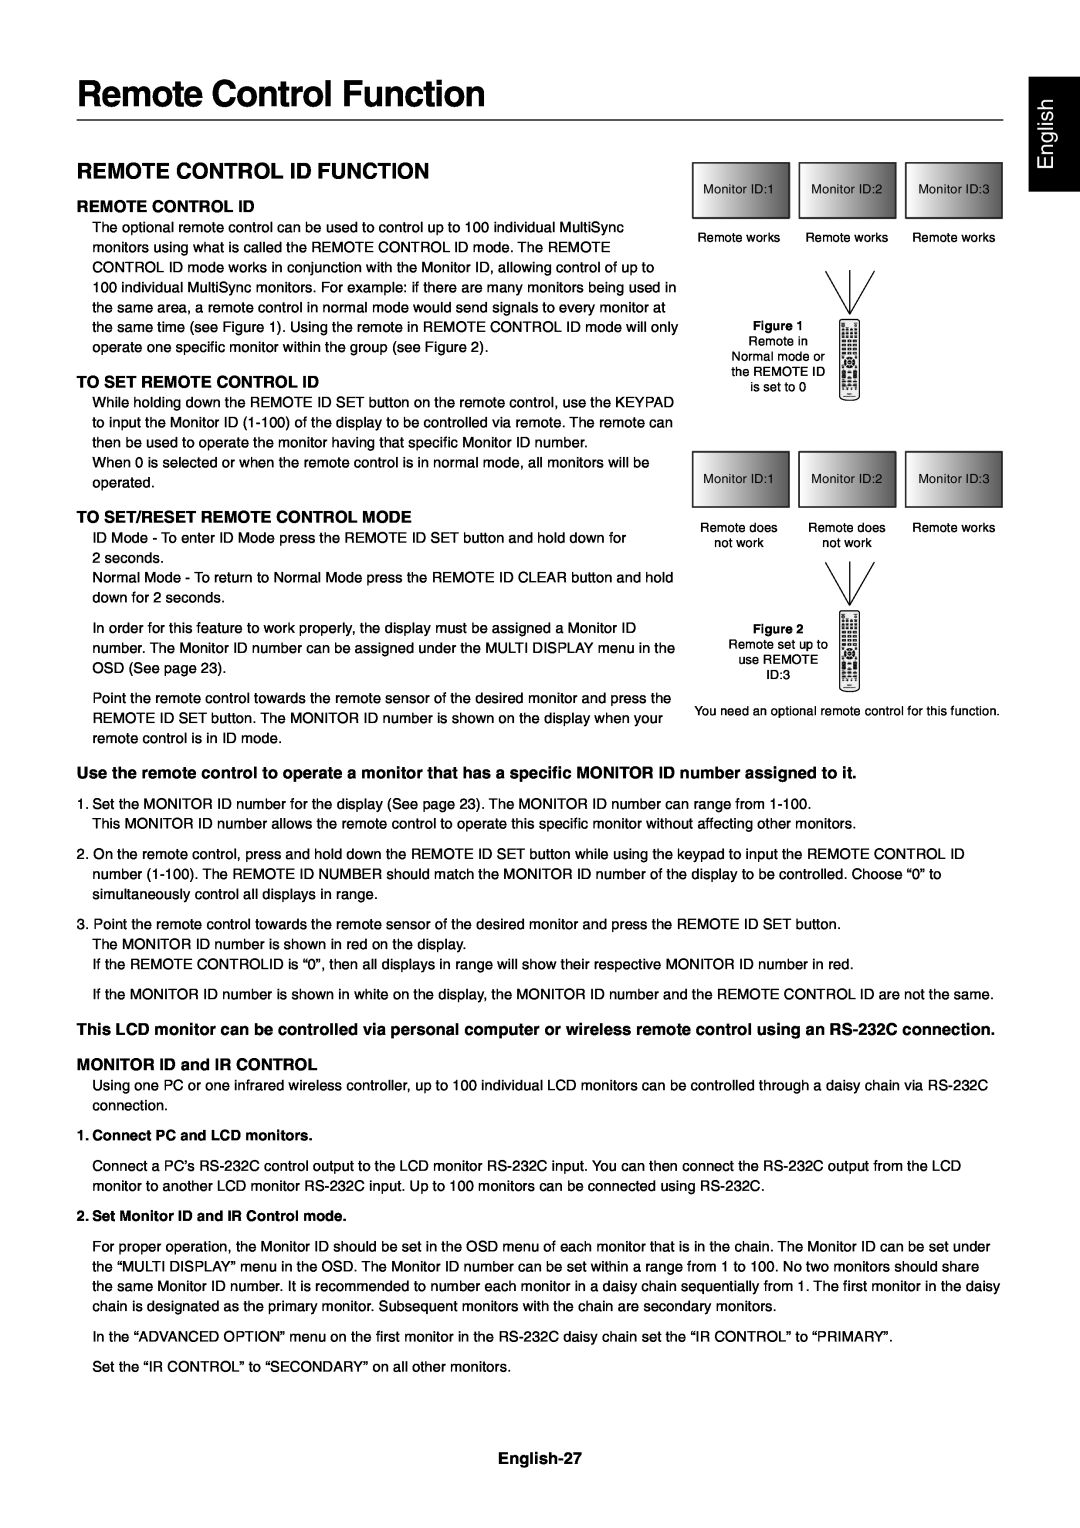 NEC X461UN user manual Remote Control Function, Remote Control Id Function, English 